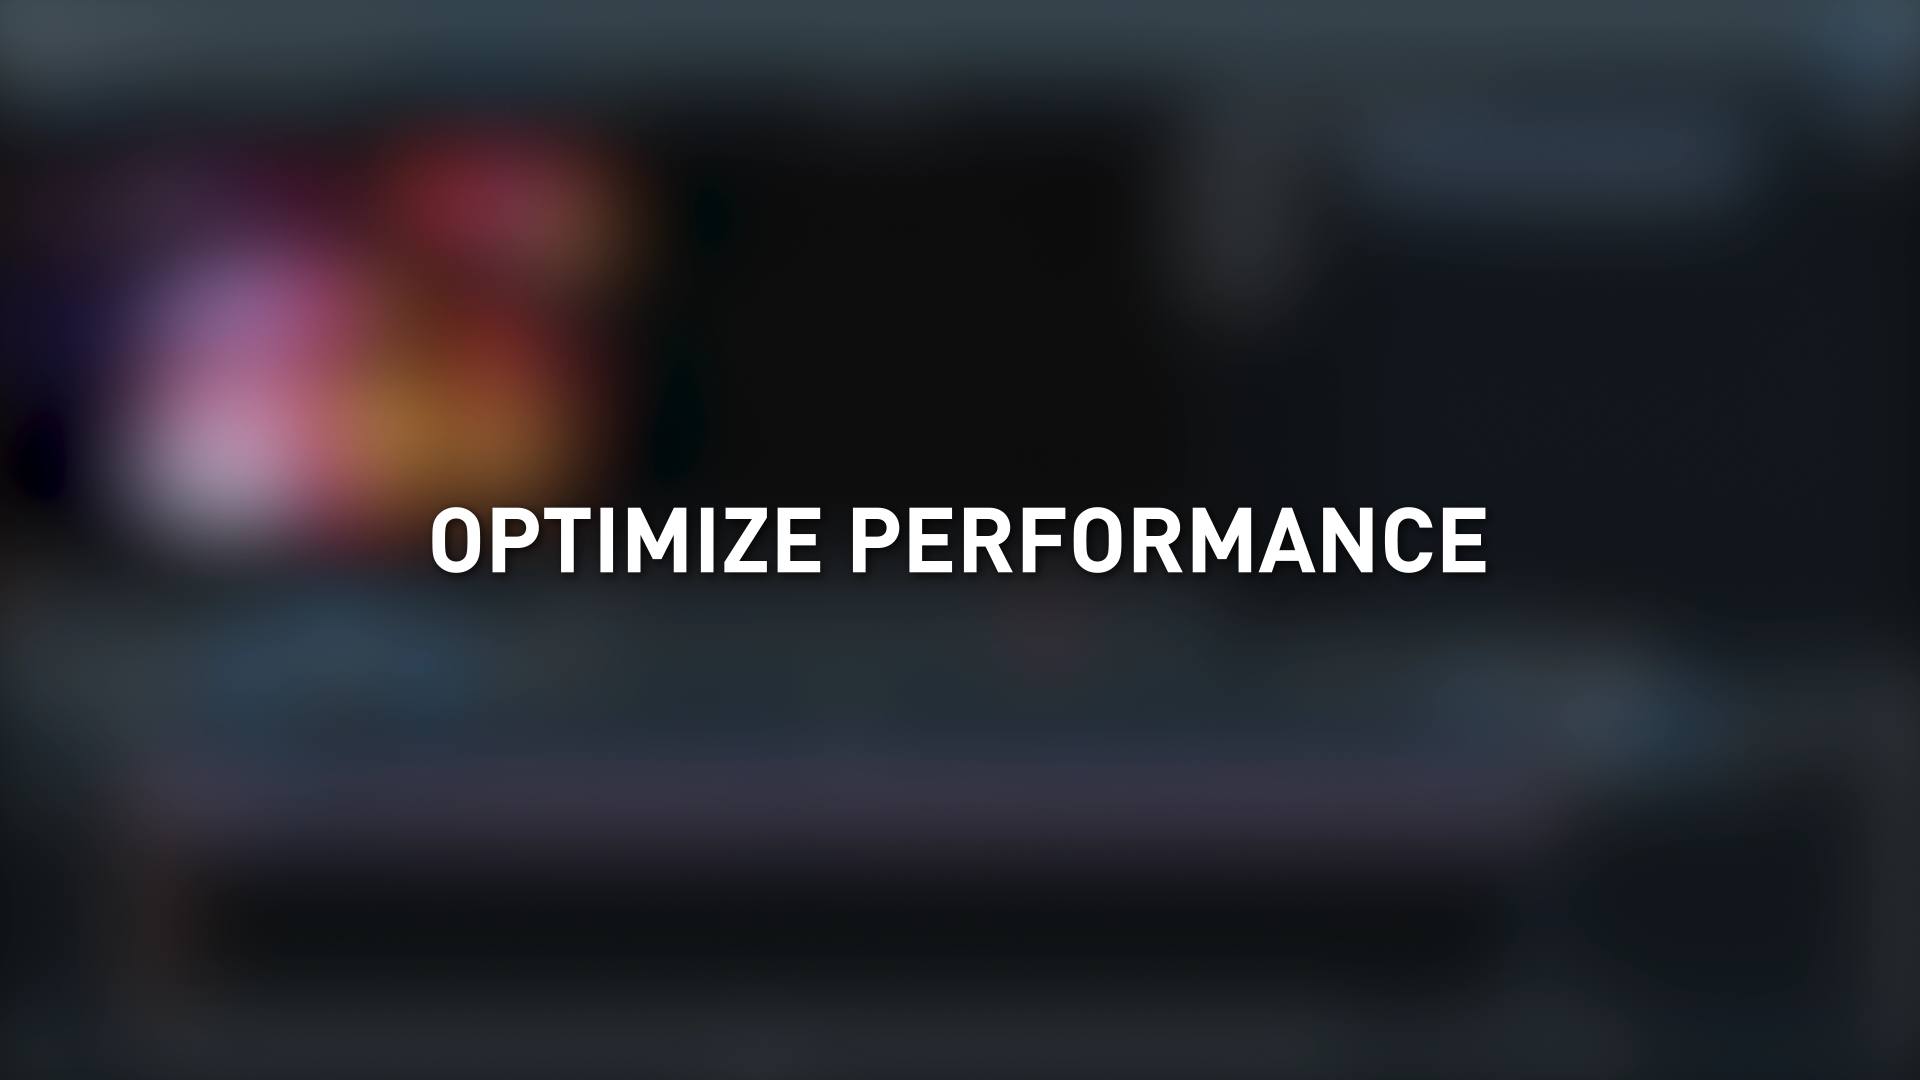 Optimize performance